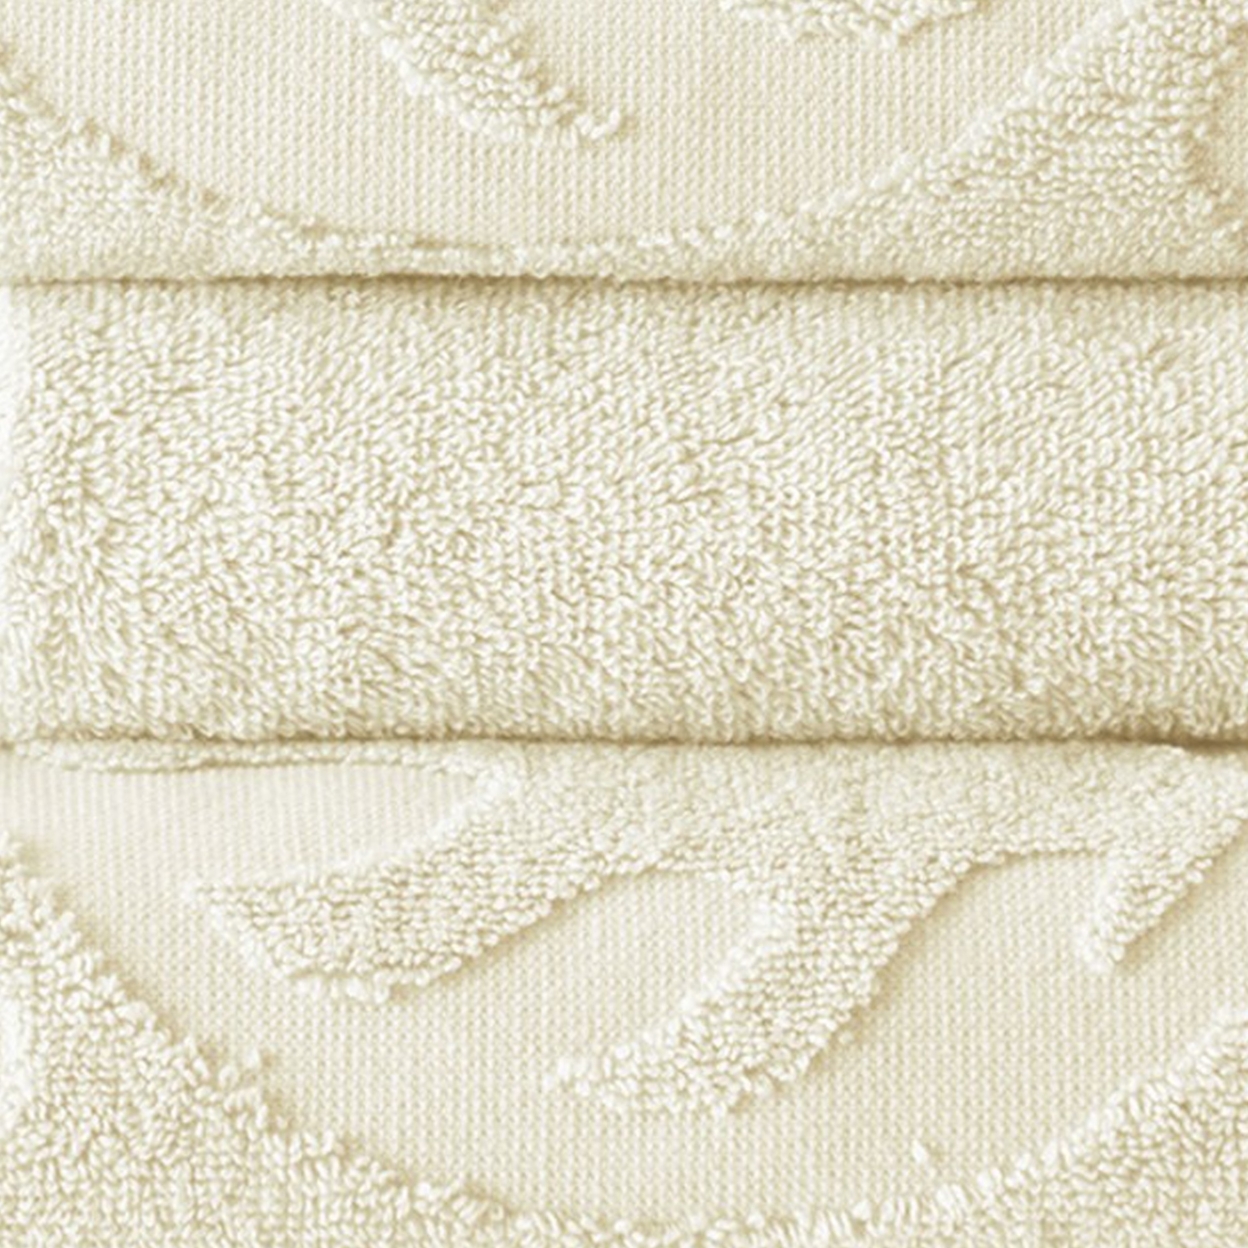 Oya 6 Piece Soft Egyptian Cotton Towel Set, Solid Medallion Pattern, Ivory- Saltoro Sherpi